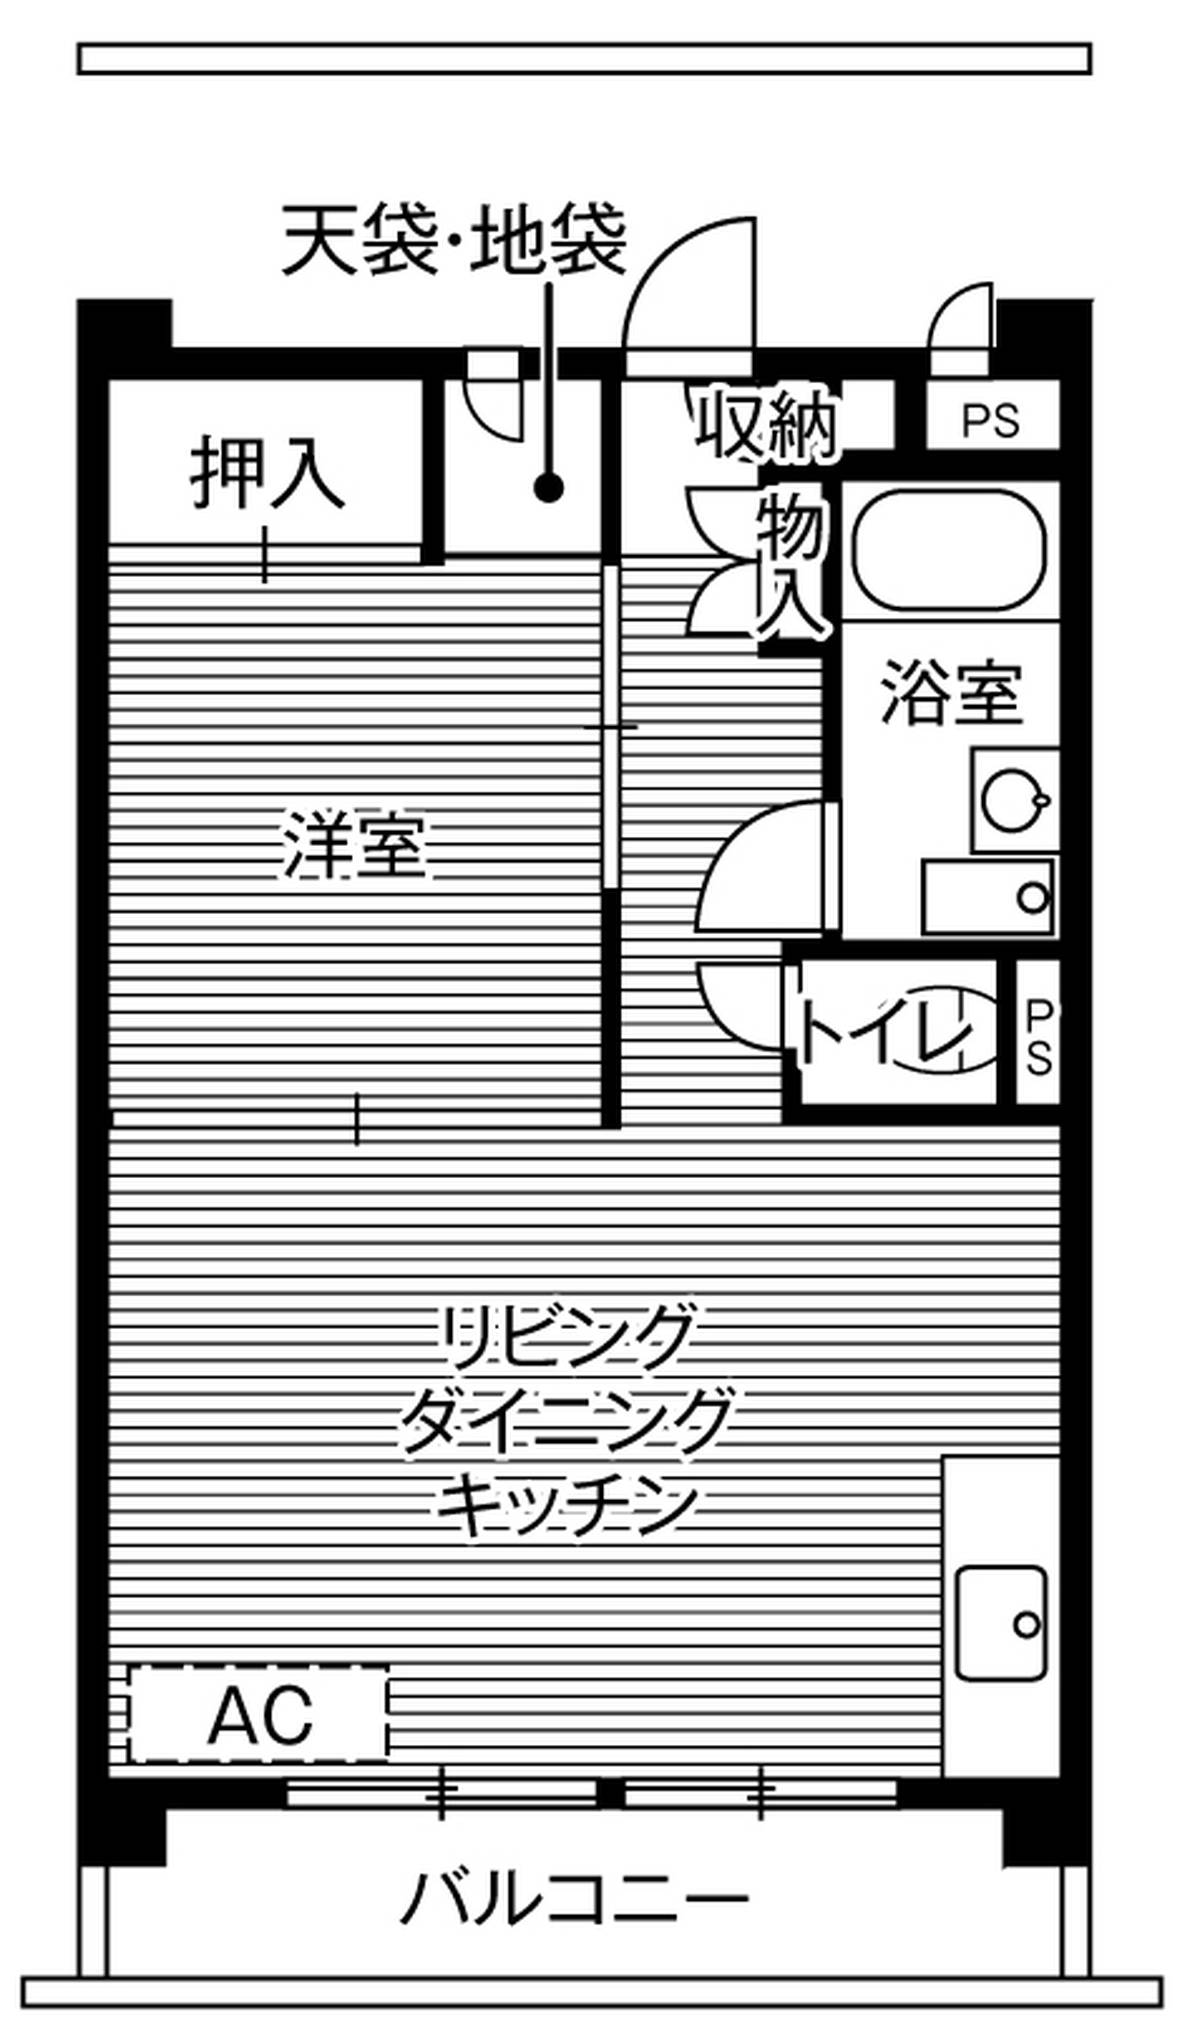 1LDK floorplan of Village House Mukoudai Tower in Nishitokyo-shi